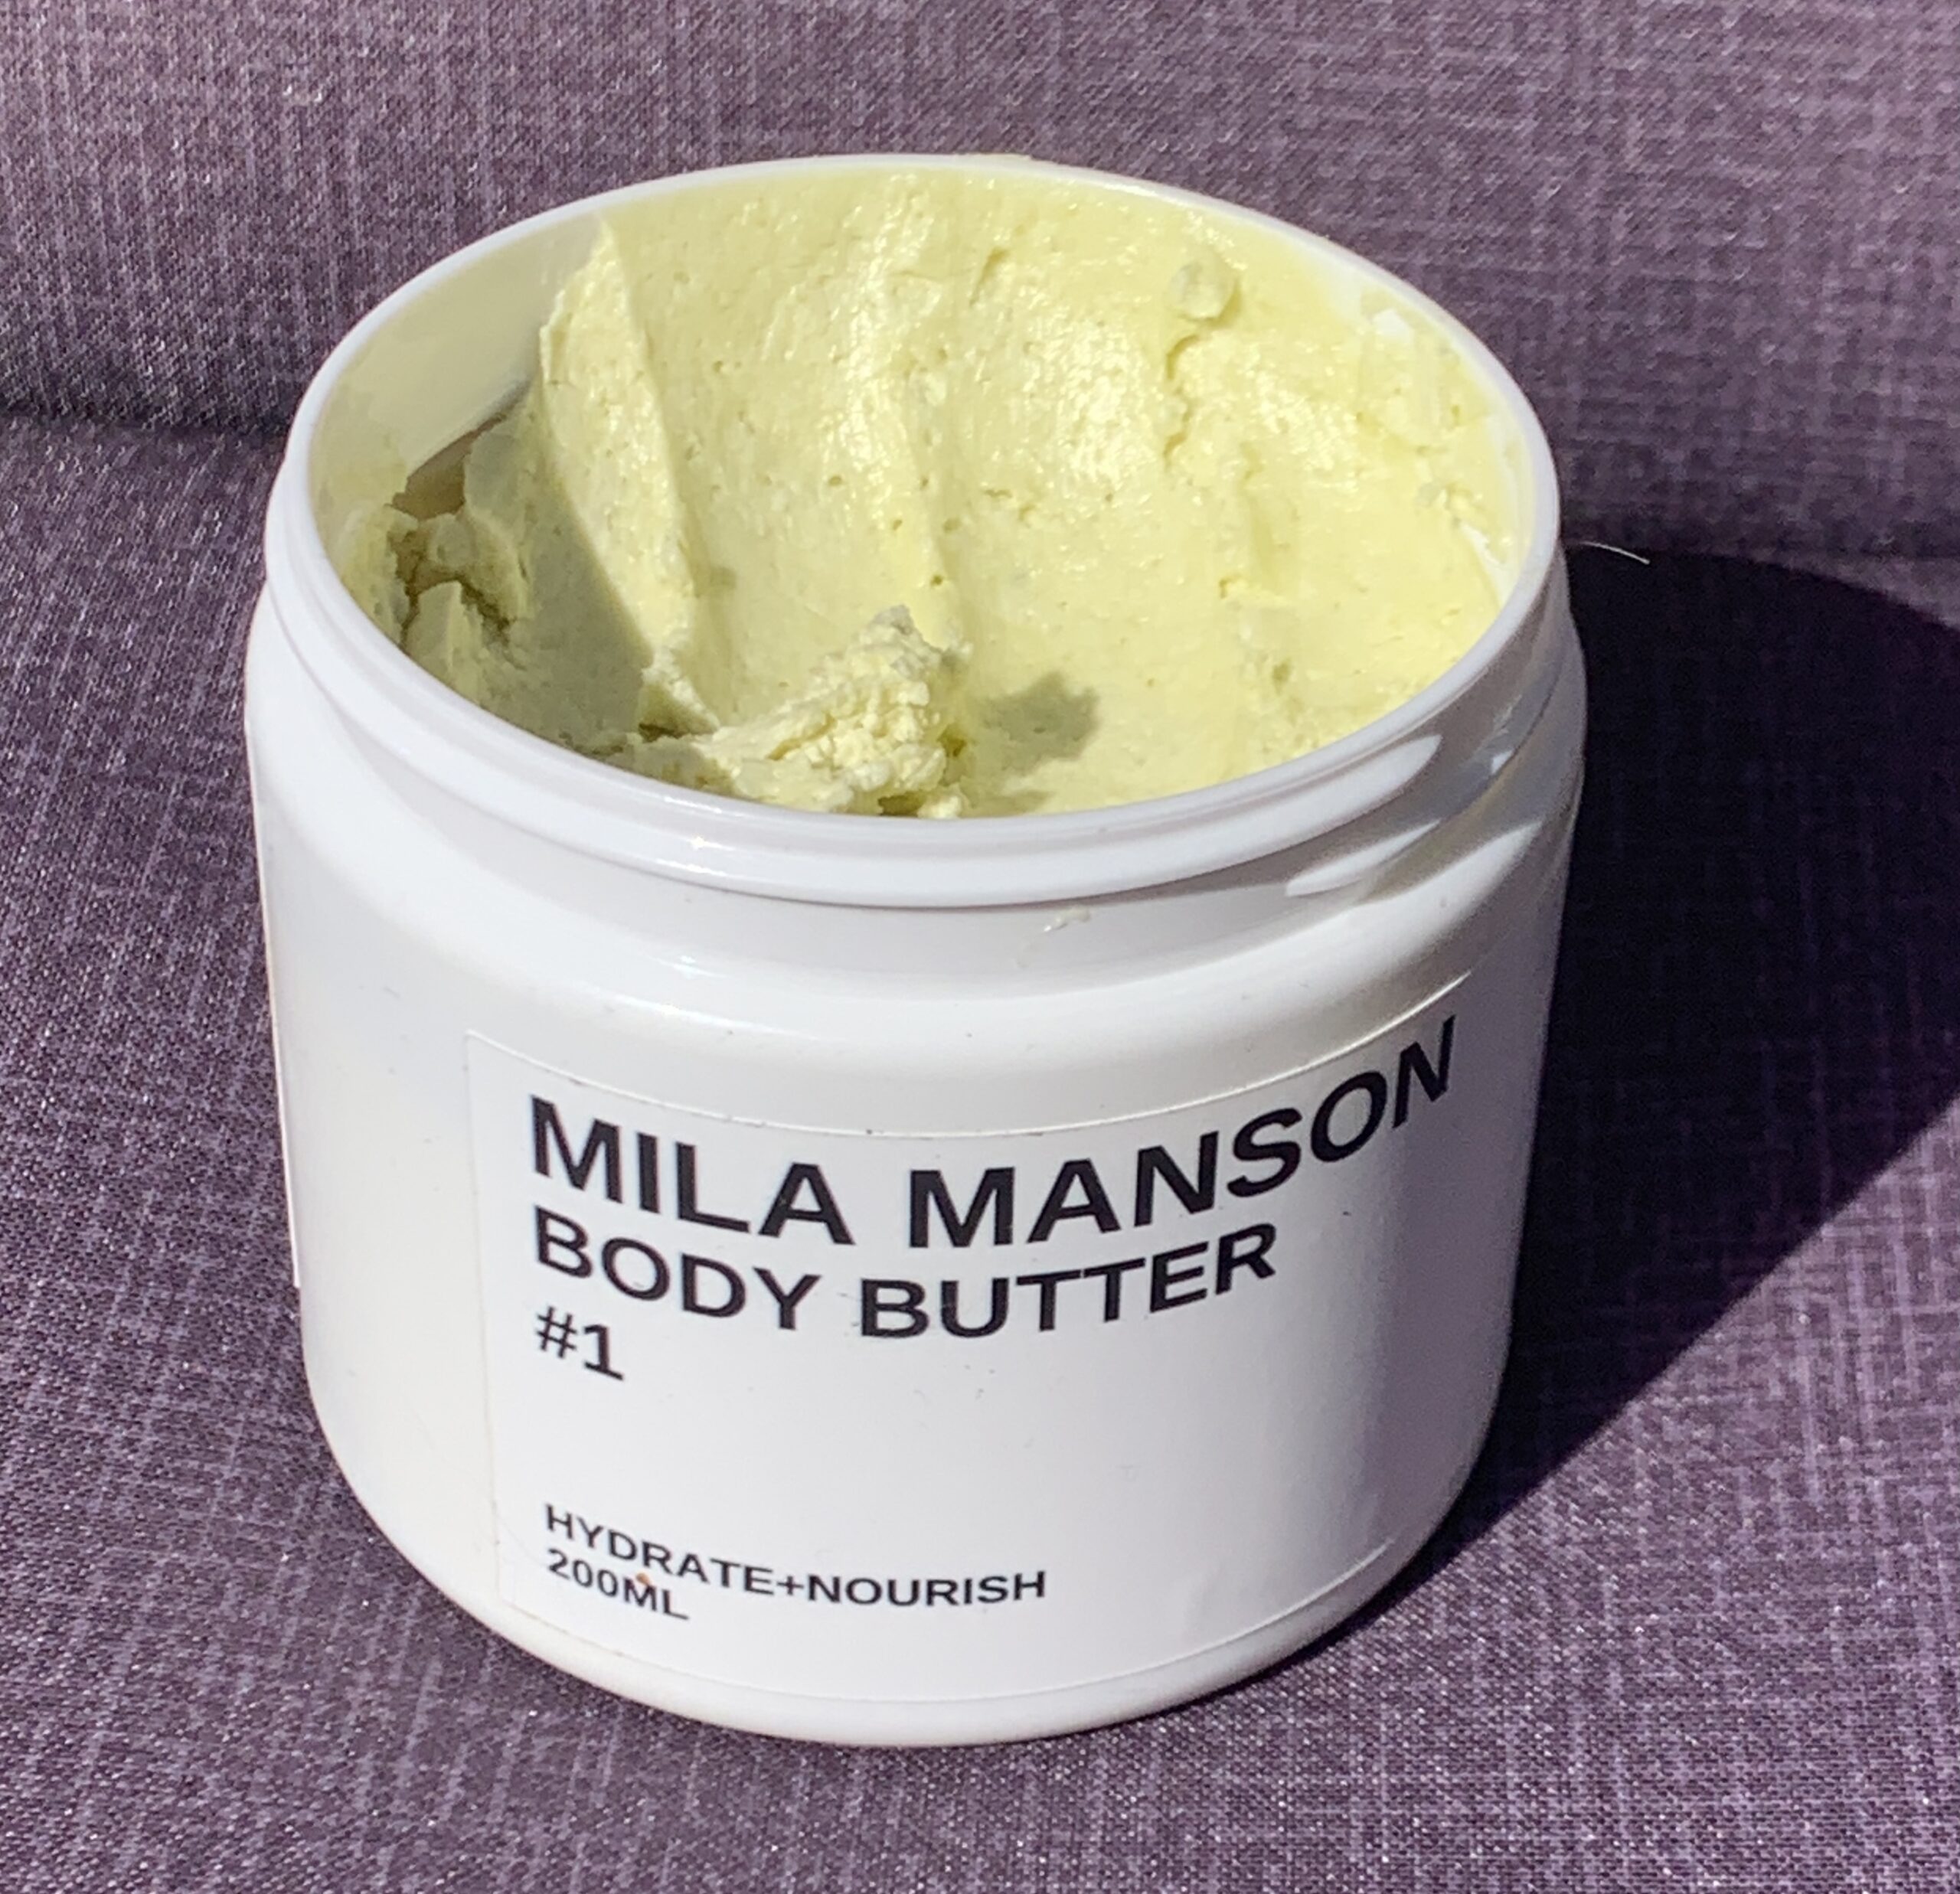 Mila Manson Body Butter #1 Mango